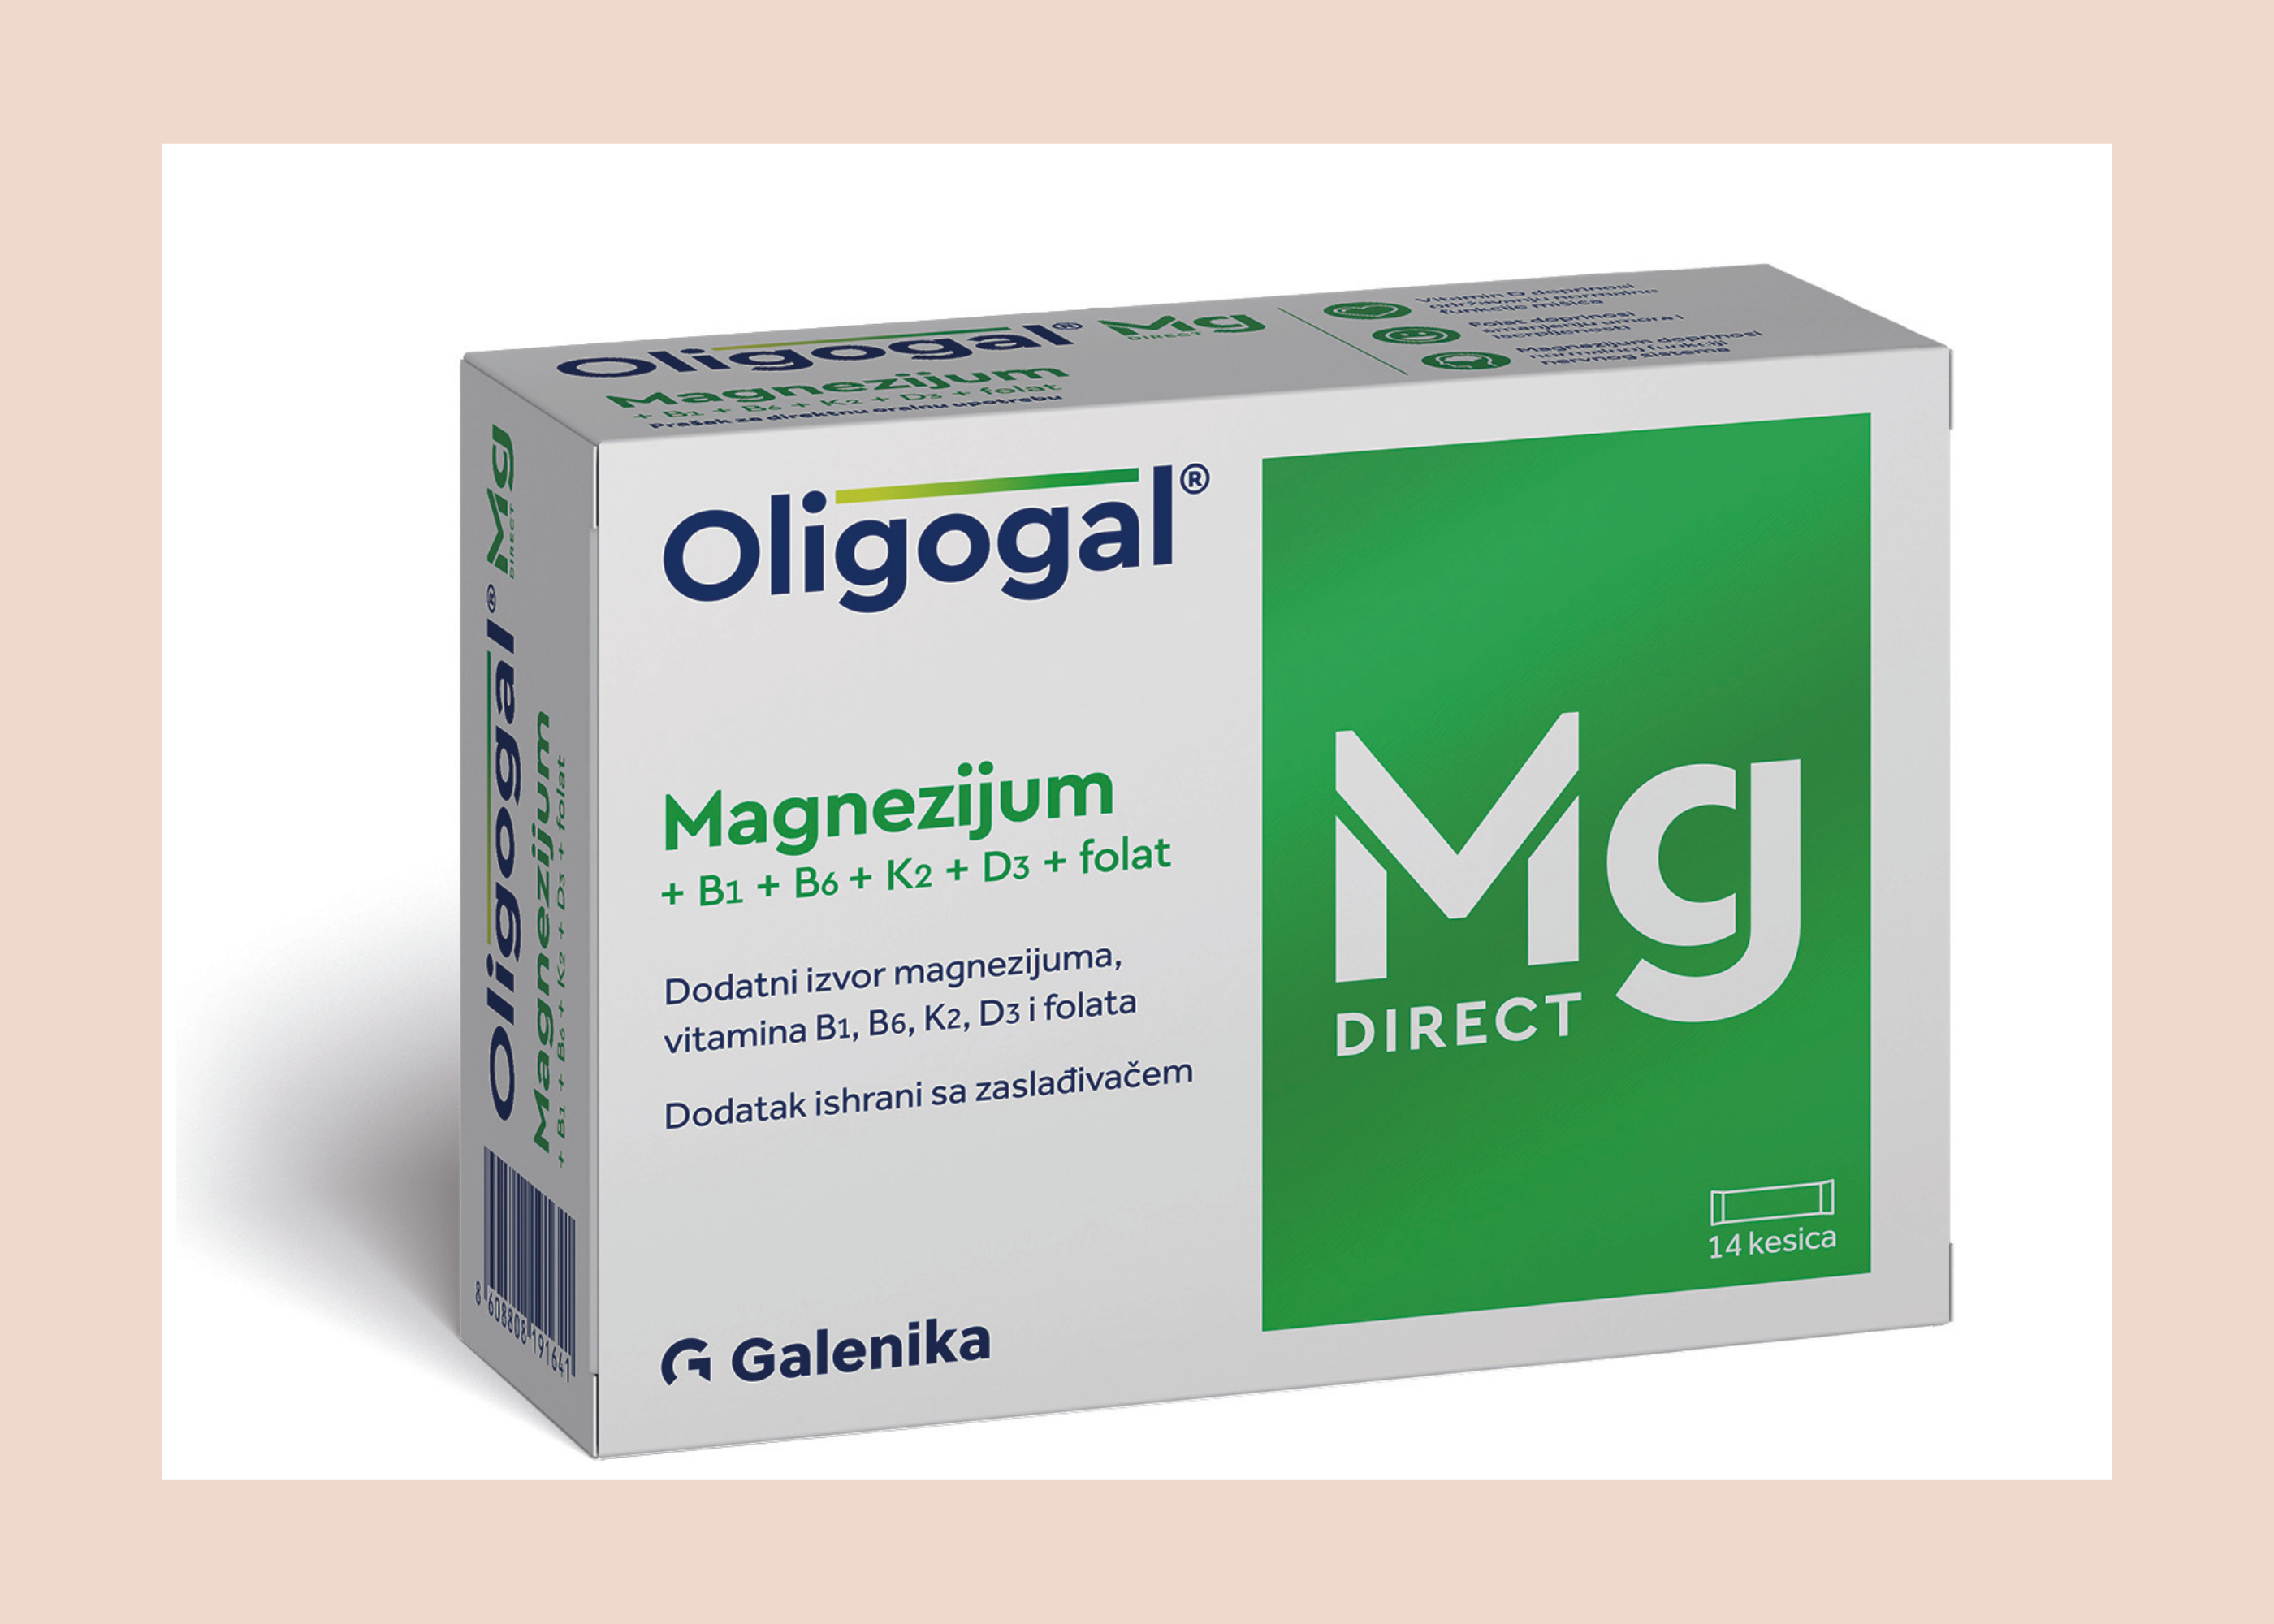 Oligogal Mg Direct Galenika